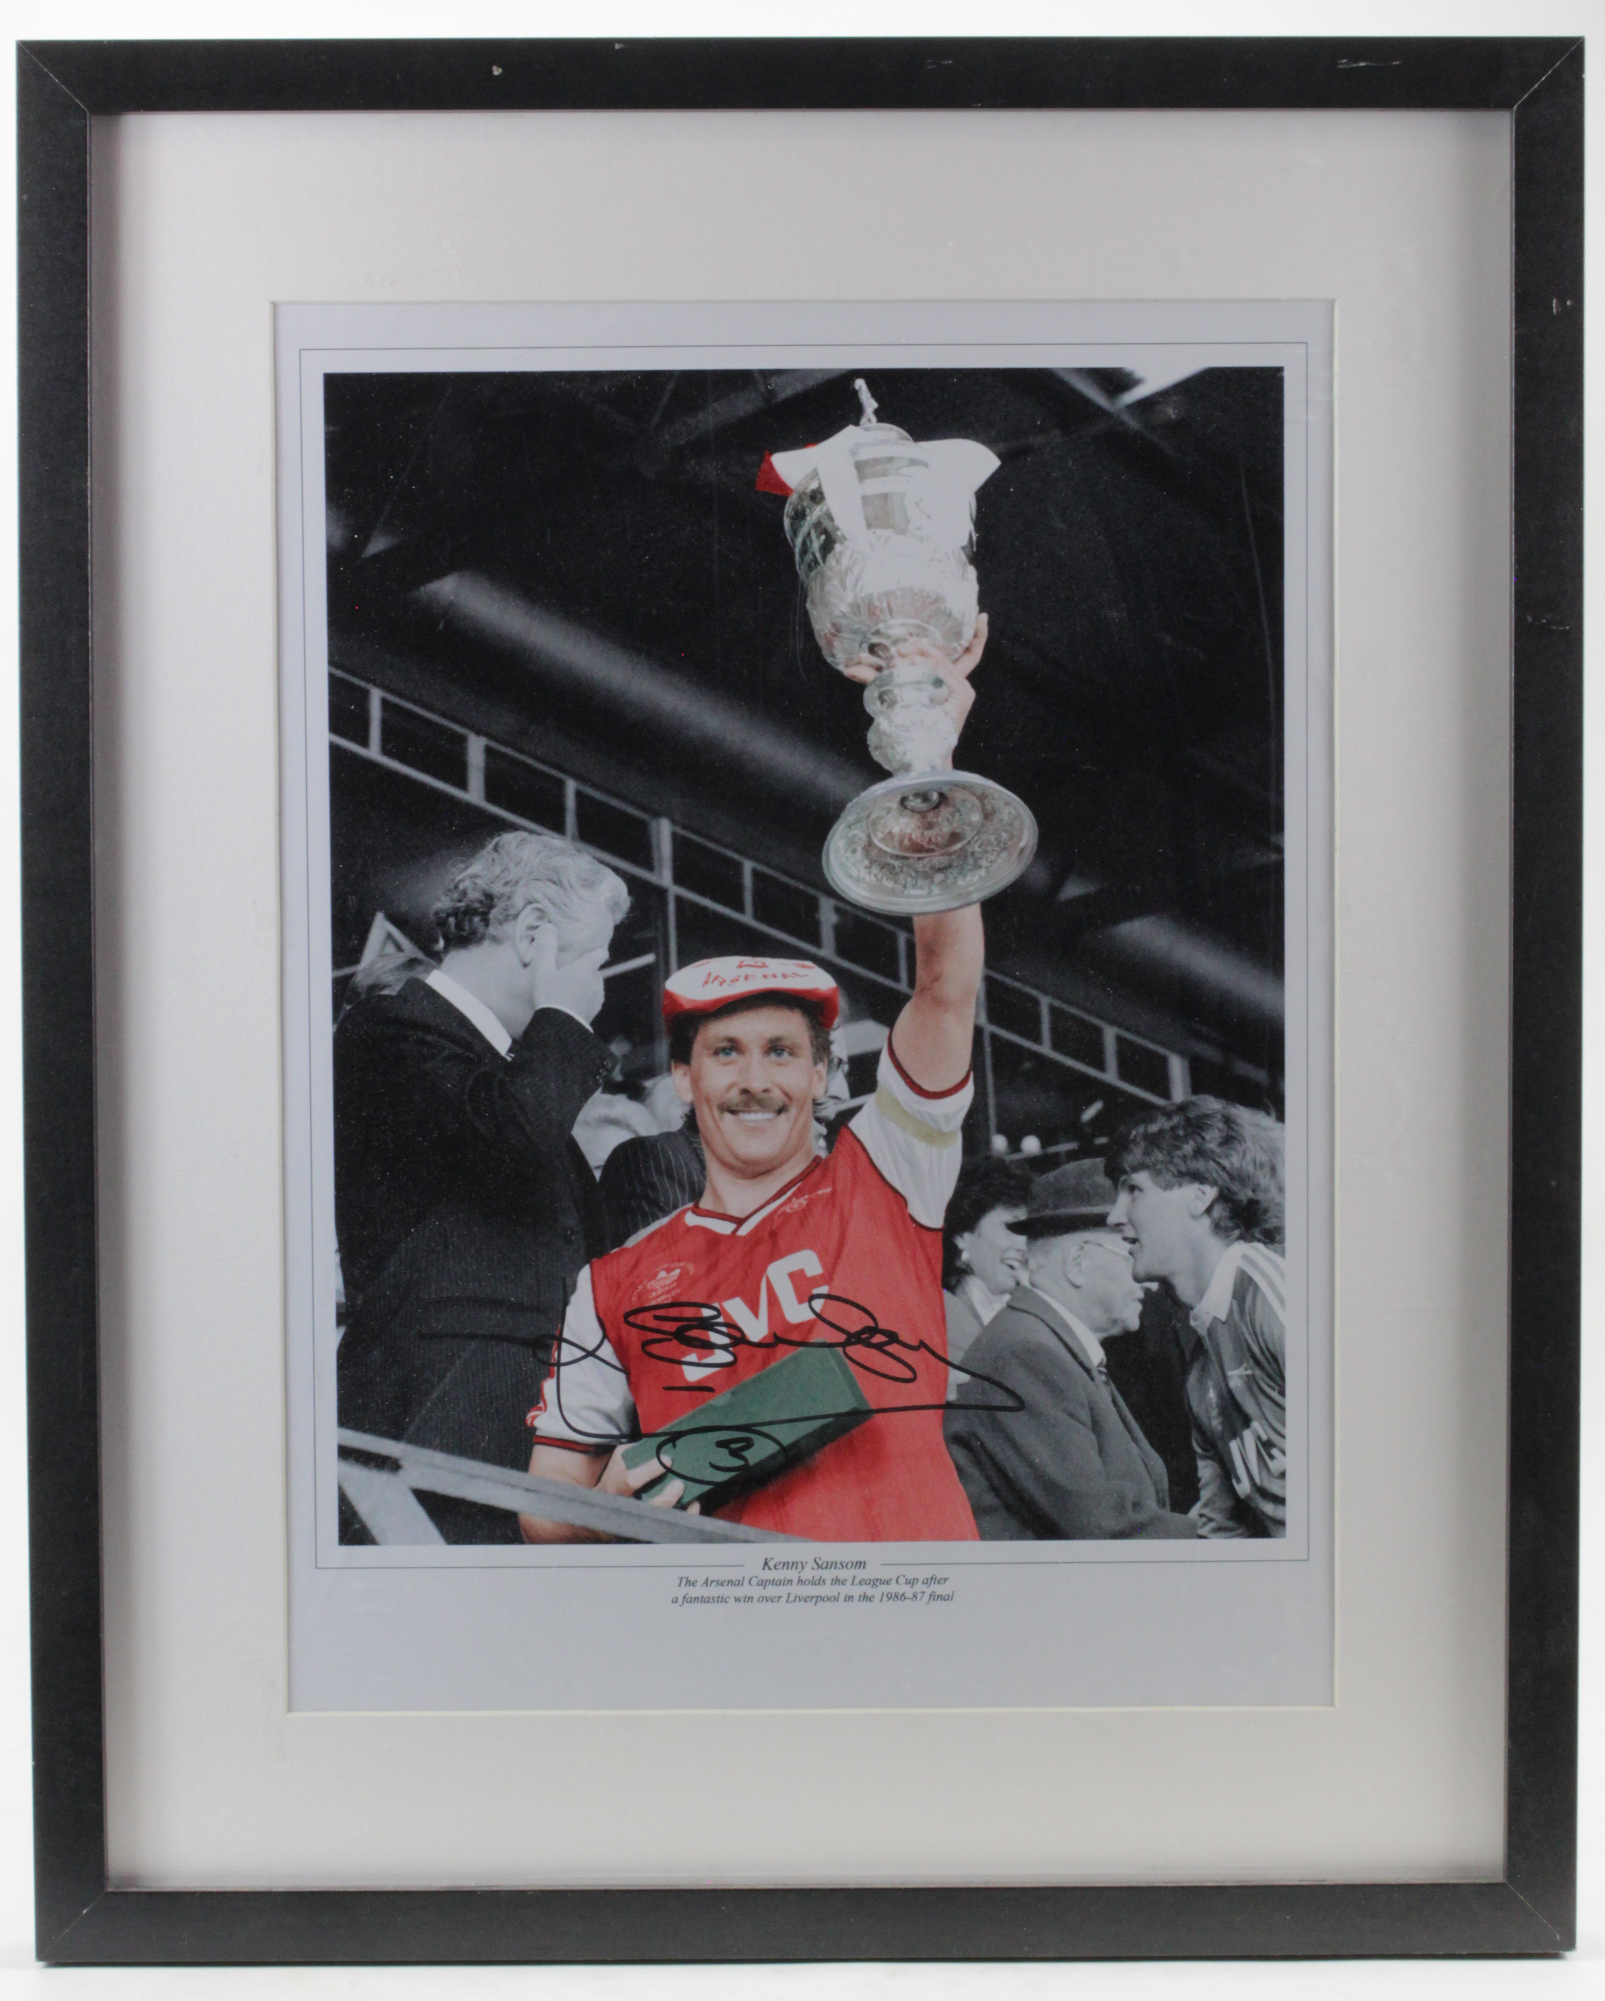 Former Arsenal Captain Kenny Sansom signed framed and mounted 16 x 12" image holding aloft the - Image 2 of 2